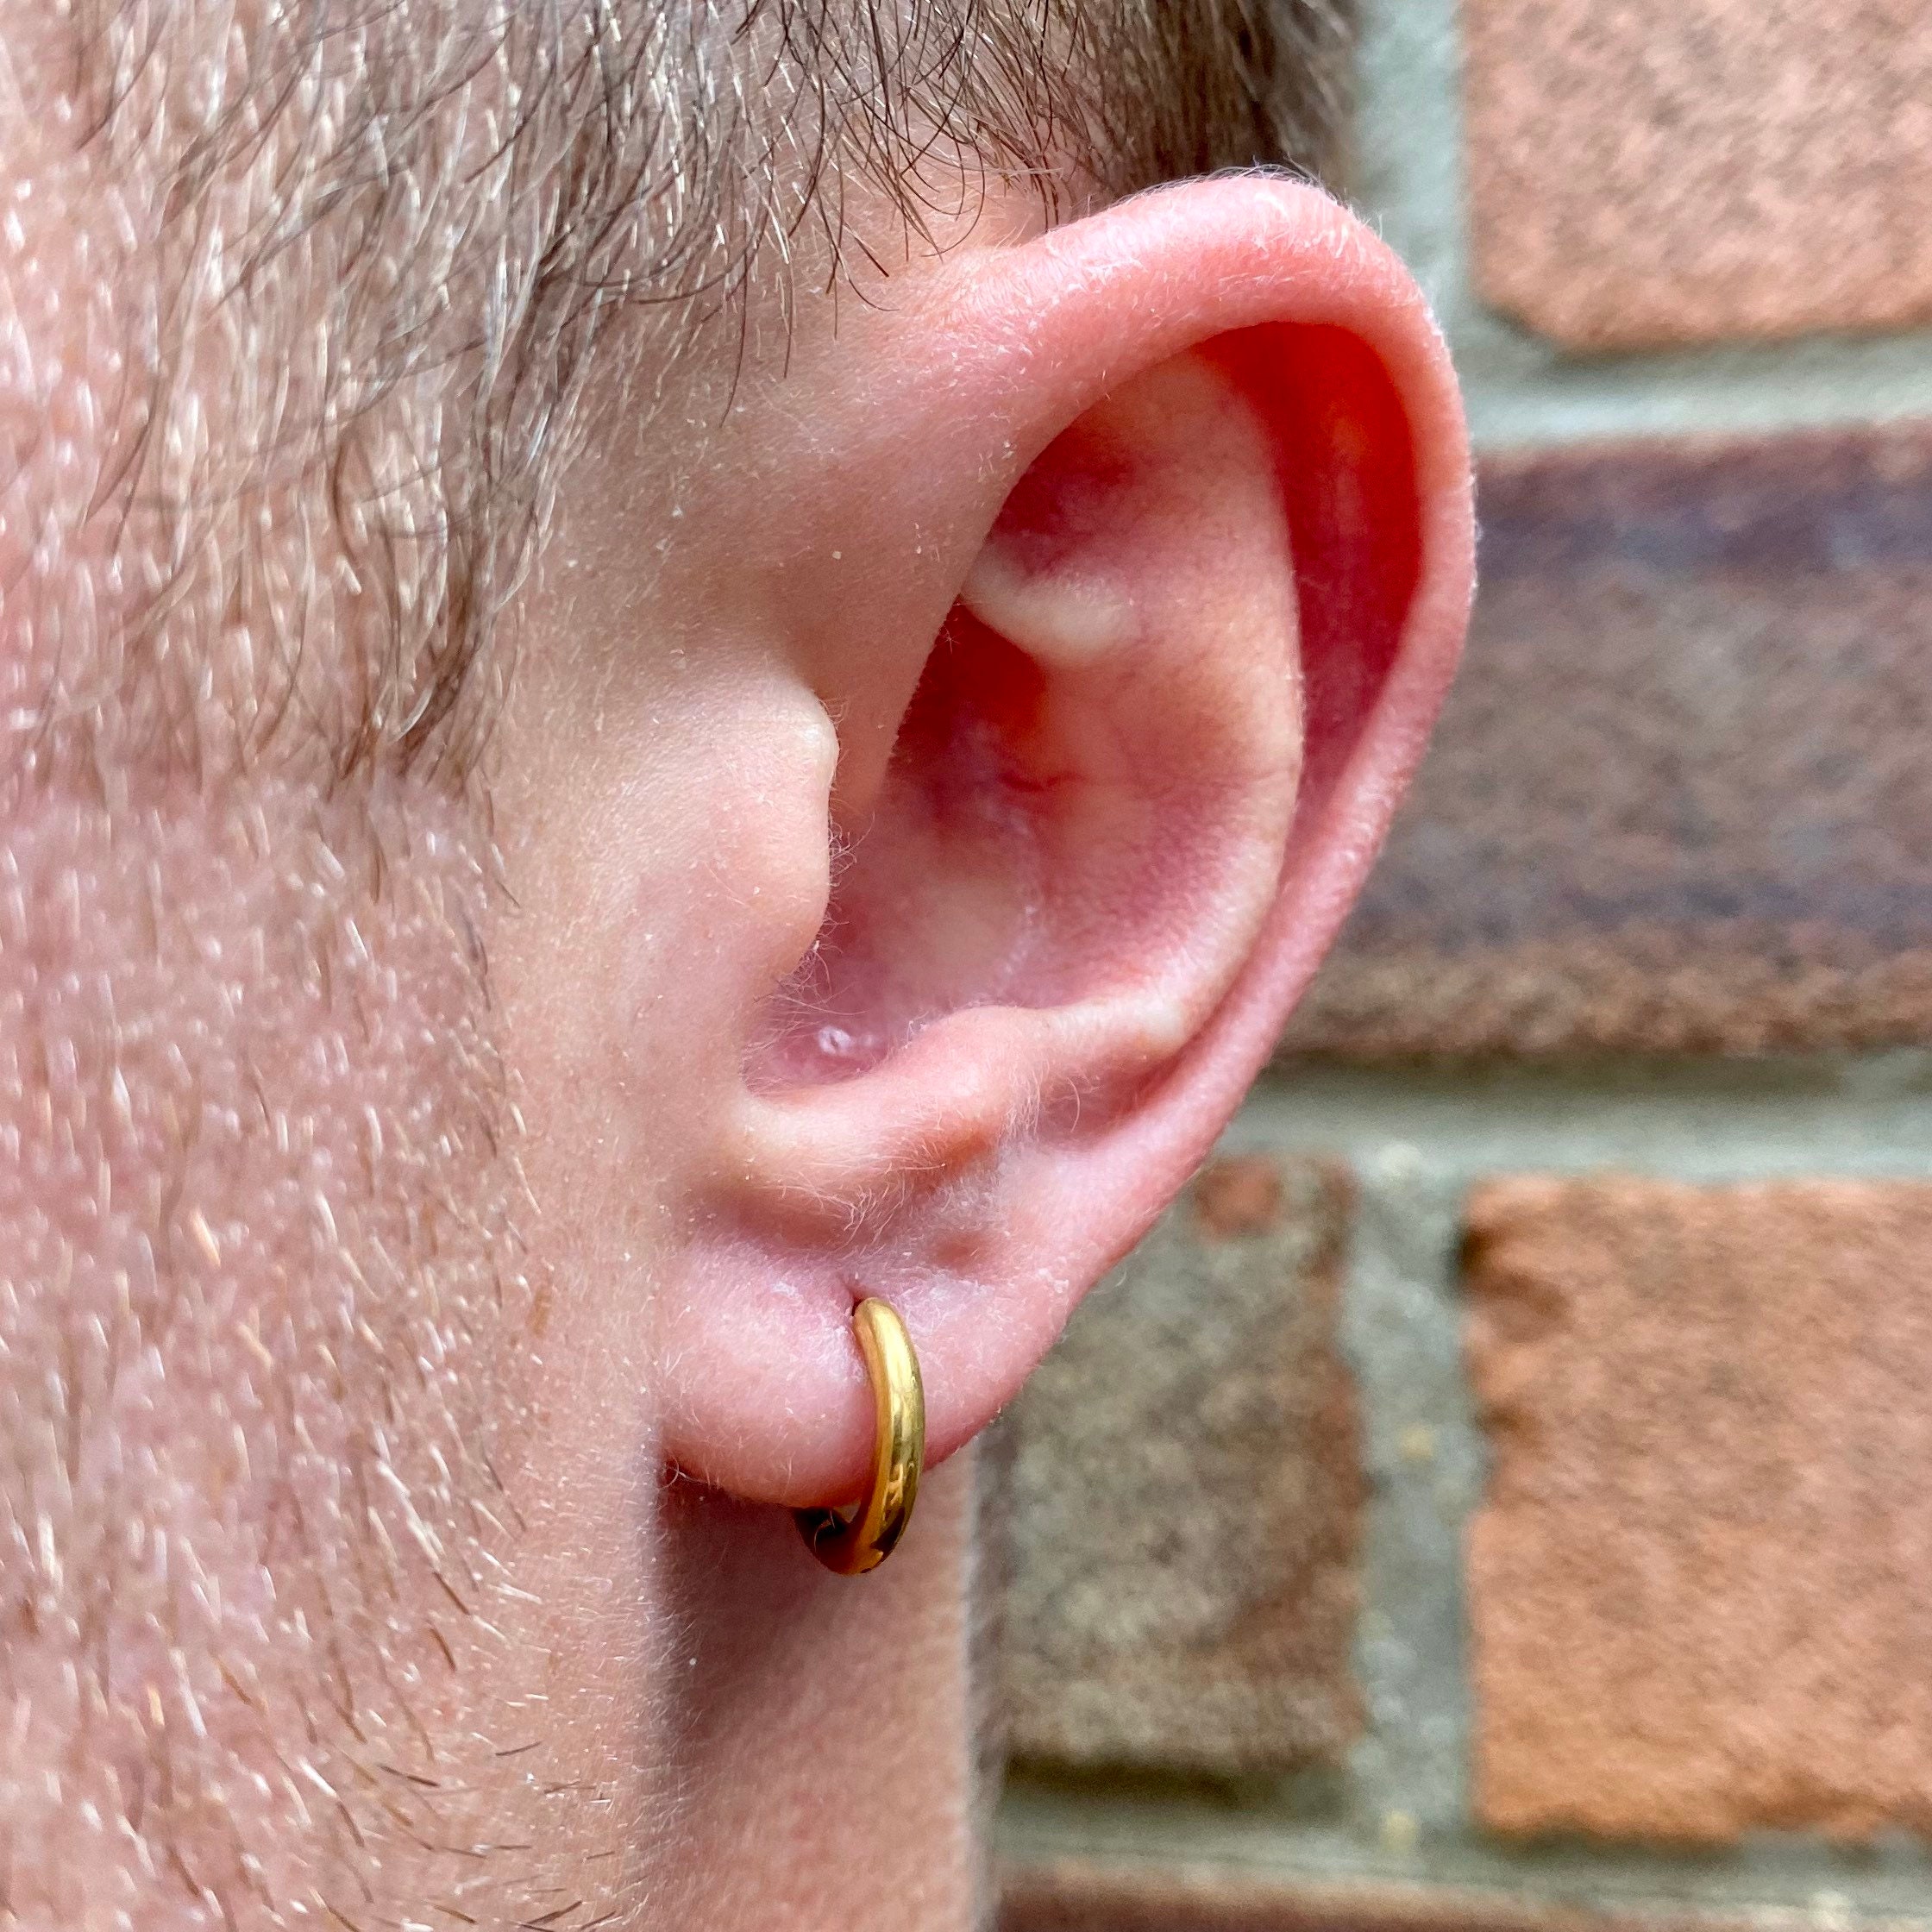 18kt Yellow Gold Round Hoop Earrings | Costco